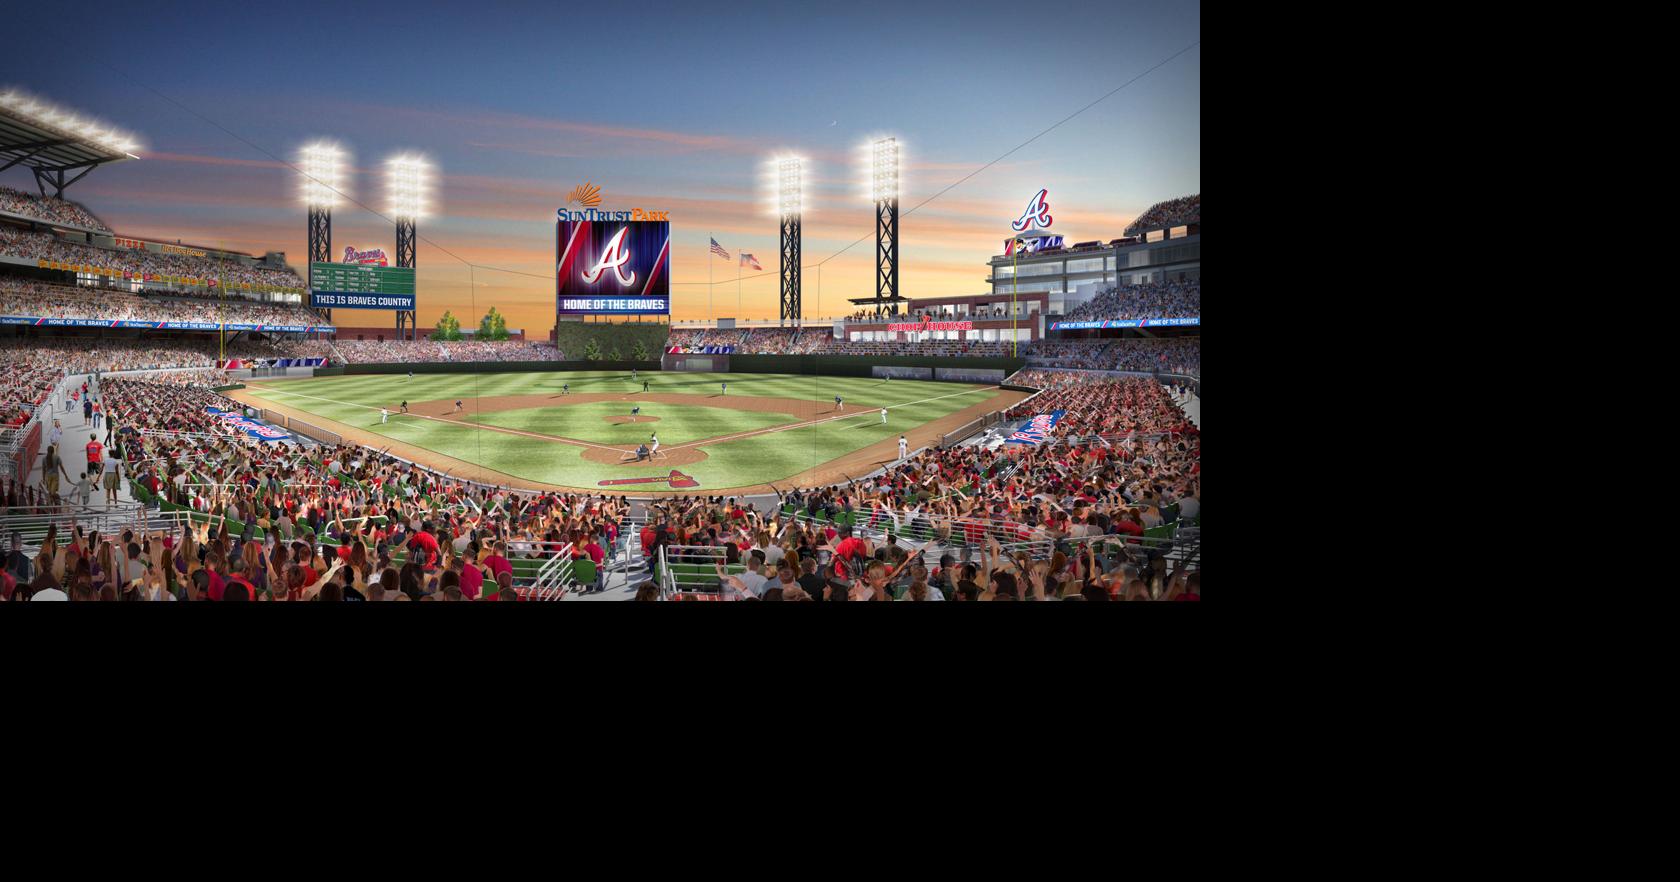 The Atlanta Braves' new stadium will be SunTrust Park